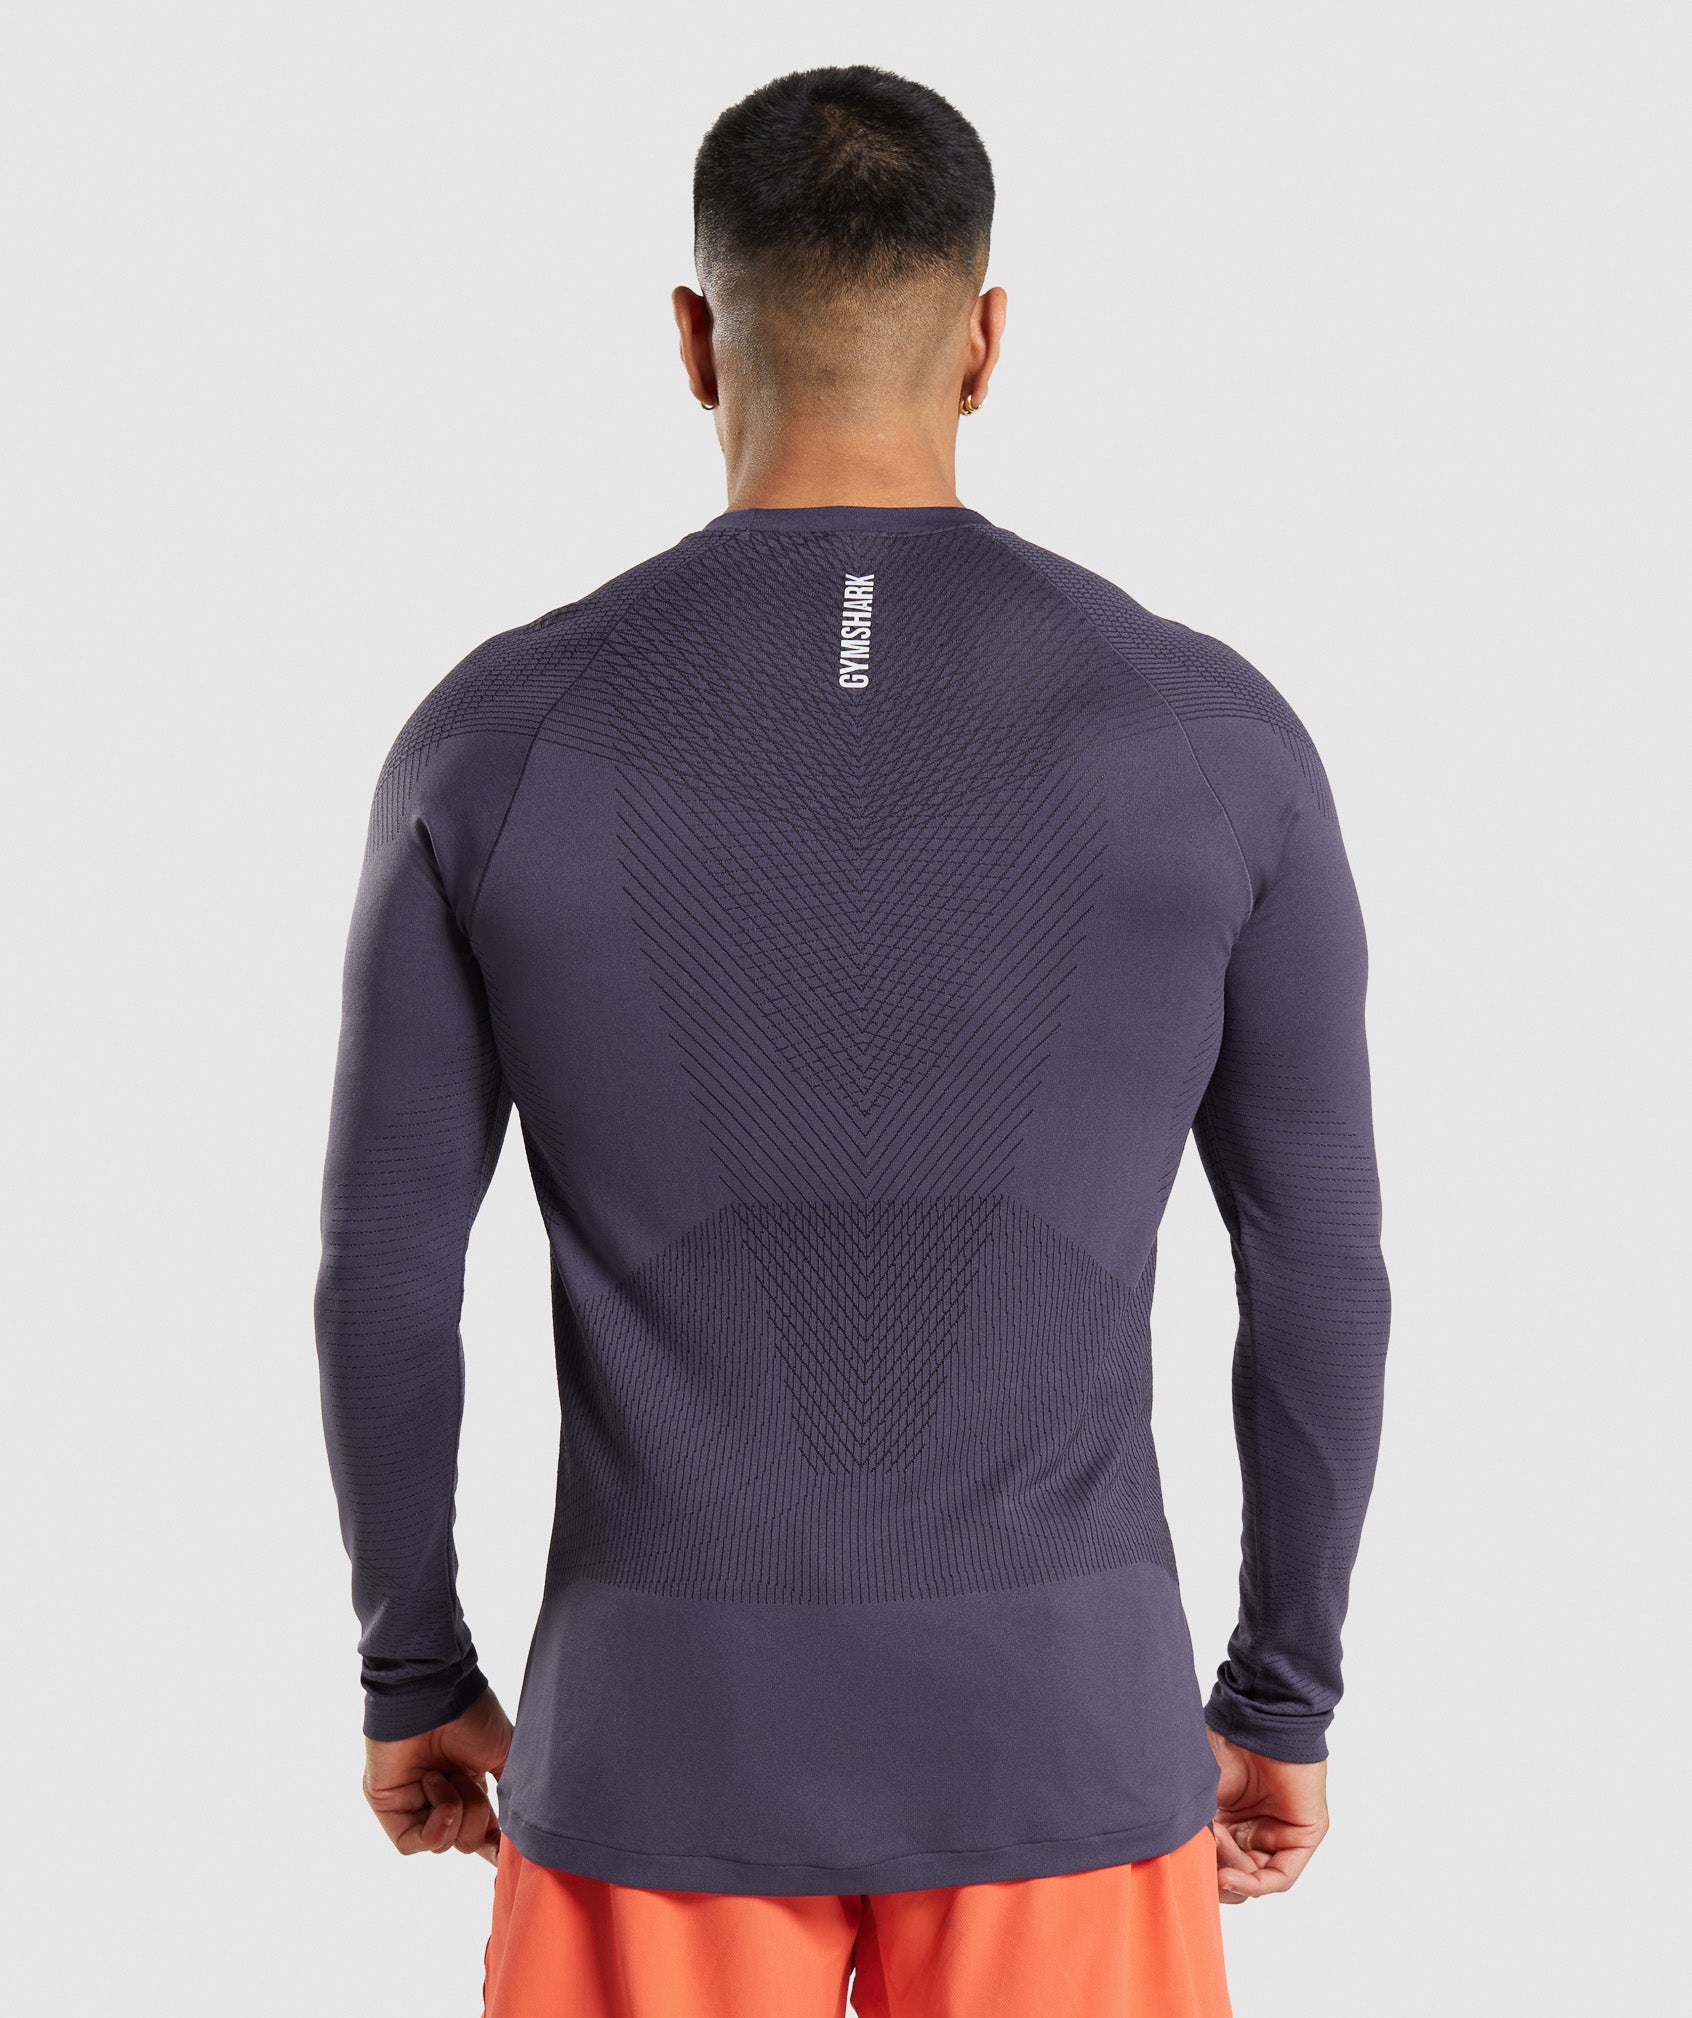 Apex Seamless Long Sleeve T-Shirt in Rich Purple/Black - view 2